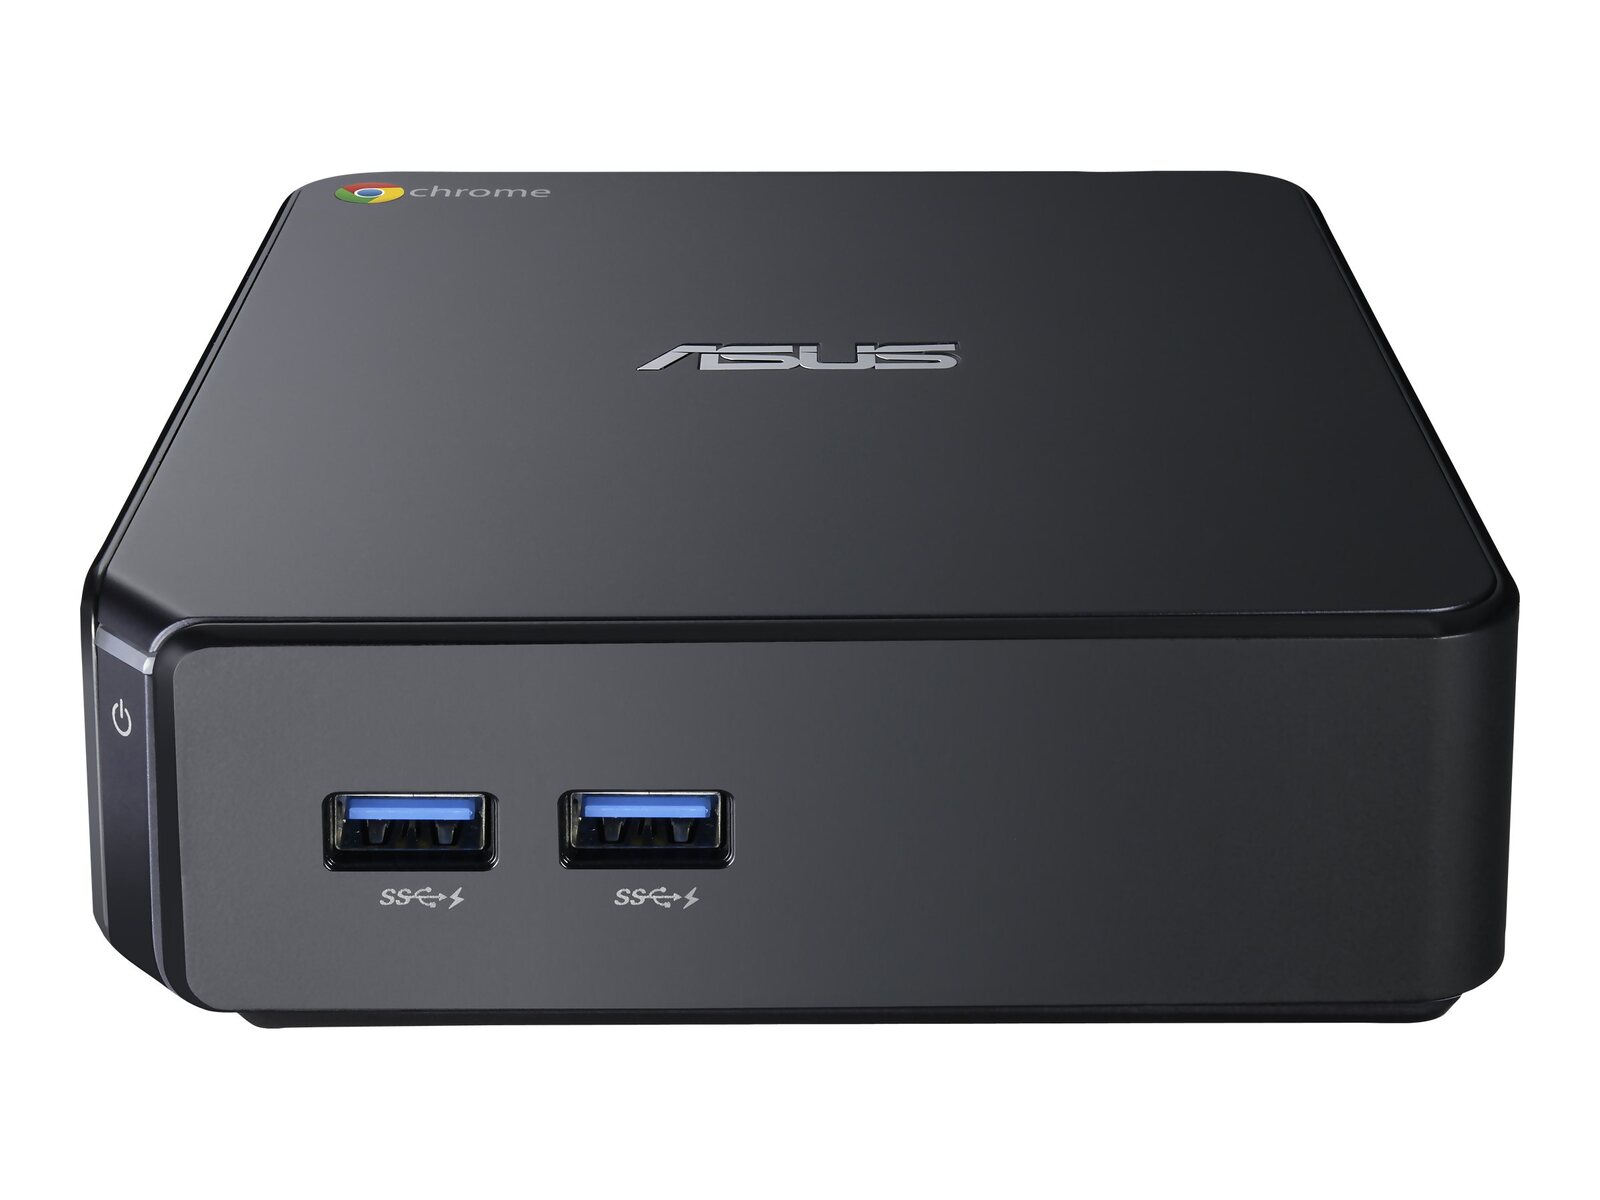 Asus CHROMEBOX CN60 Micro Intel Celeron 2955U 1.40GHz 2GB RAM 500GB SSD Wi-Fi Chrome OS Full Size Image